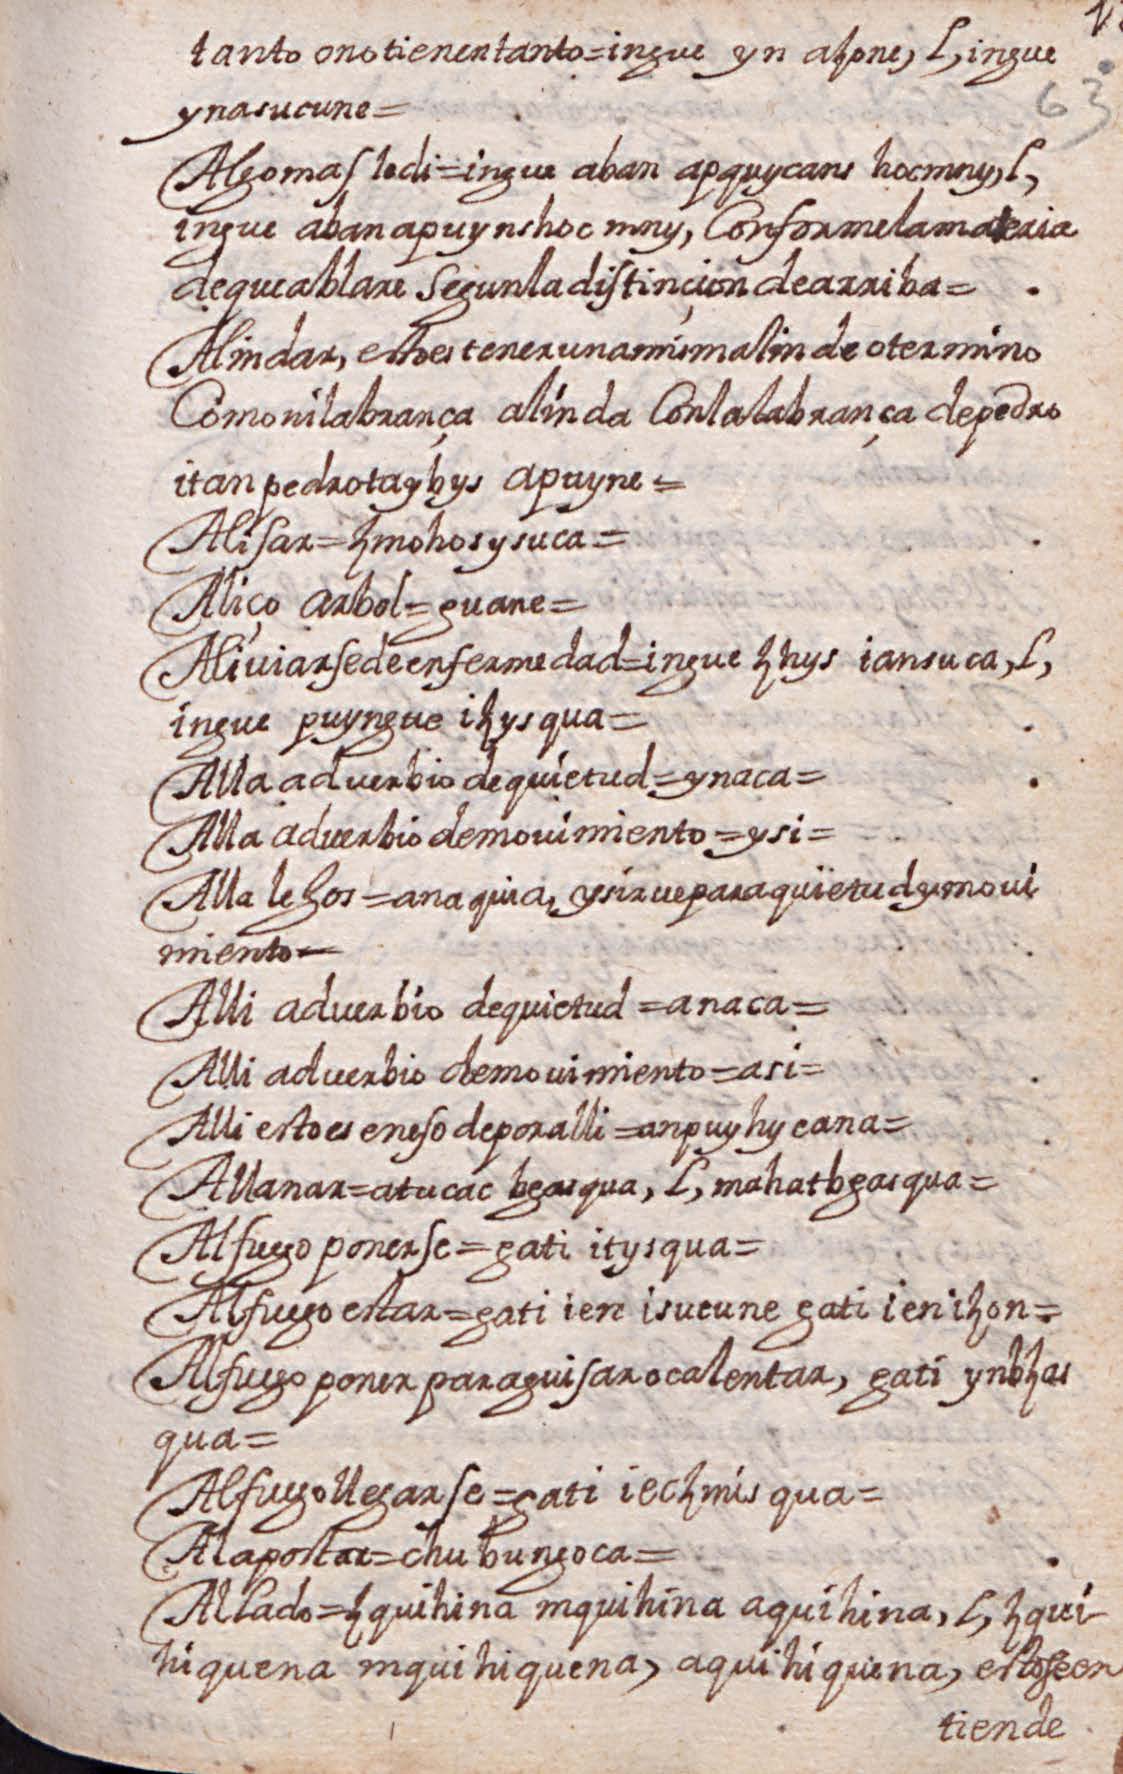 Manuscrito 158 BNC Vocabulario - fol 12r.jpg